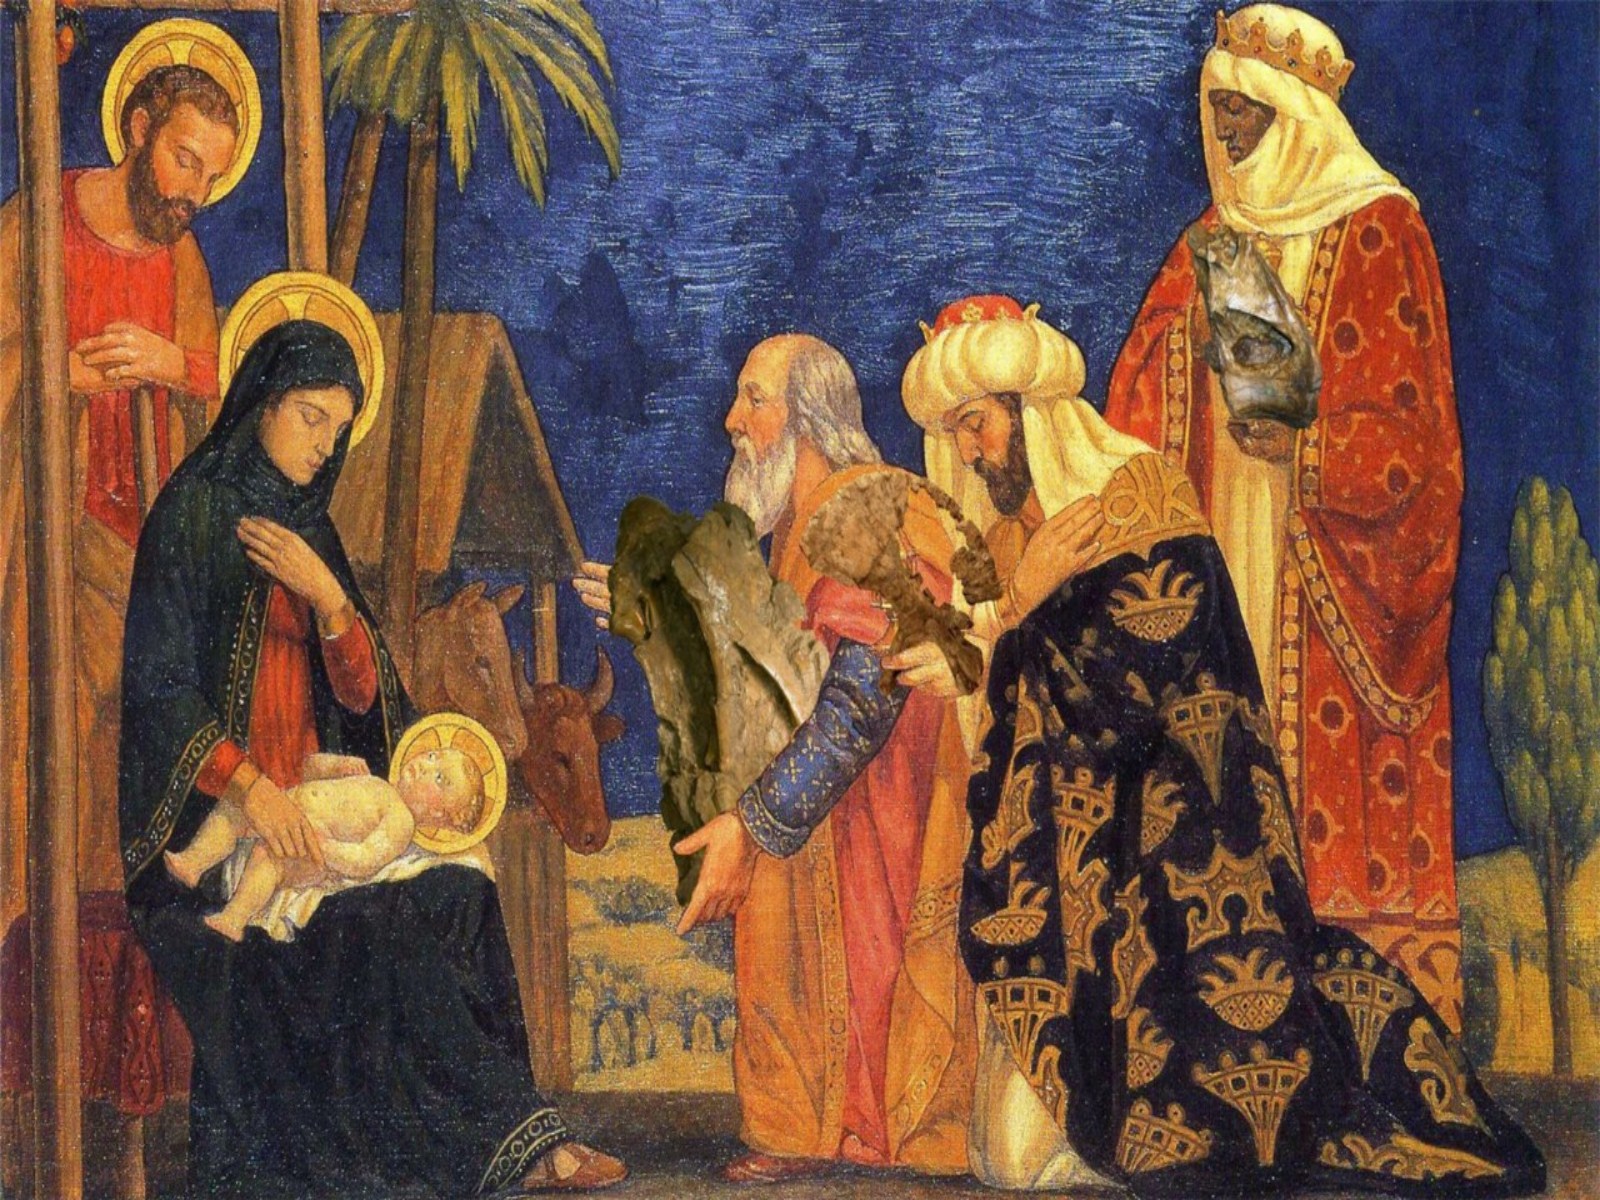 Religious Christmas Background Wallpaper9